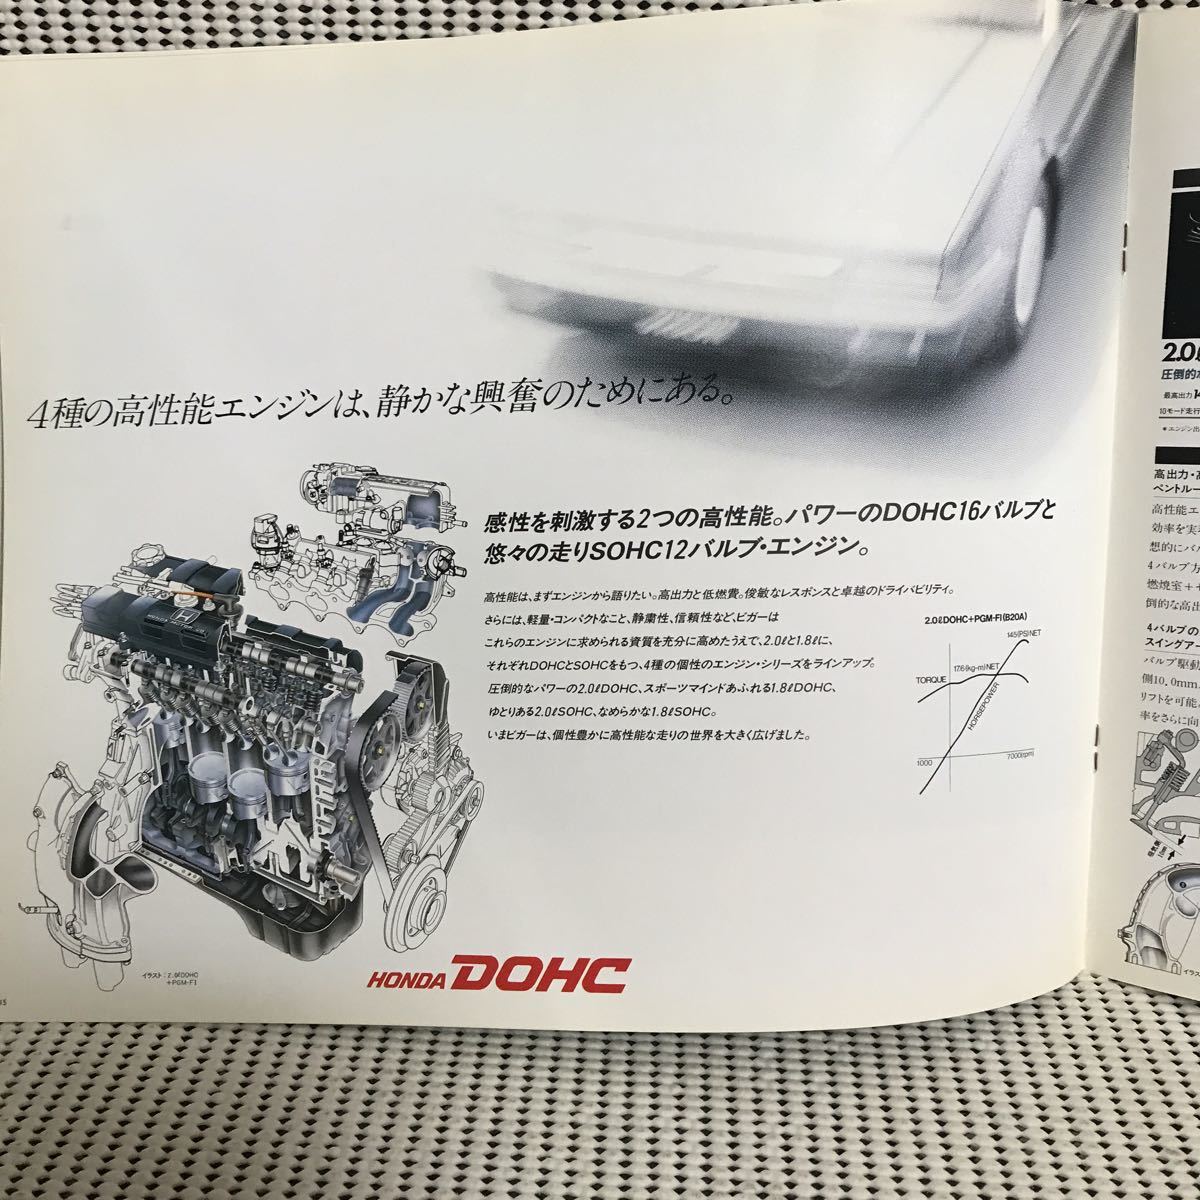  Honda Vigor каталог большой размер размер 